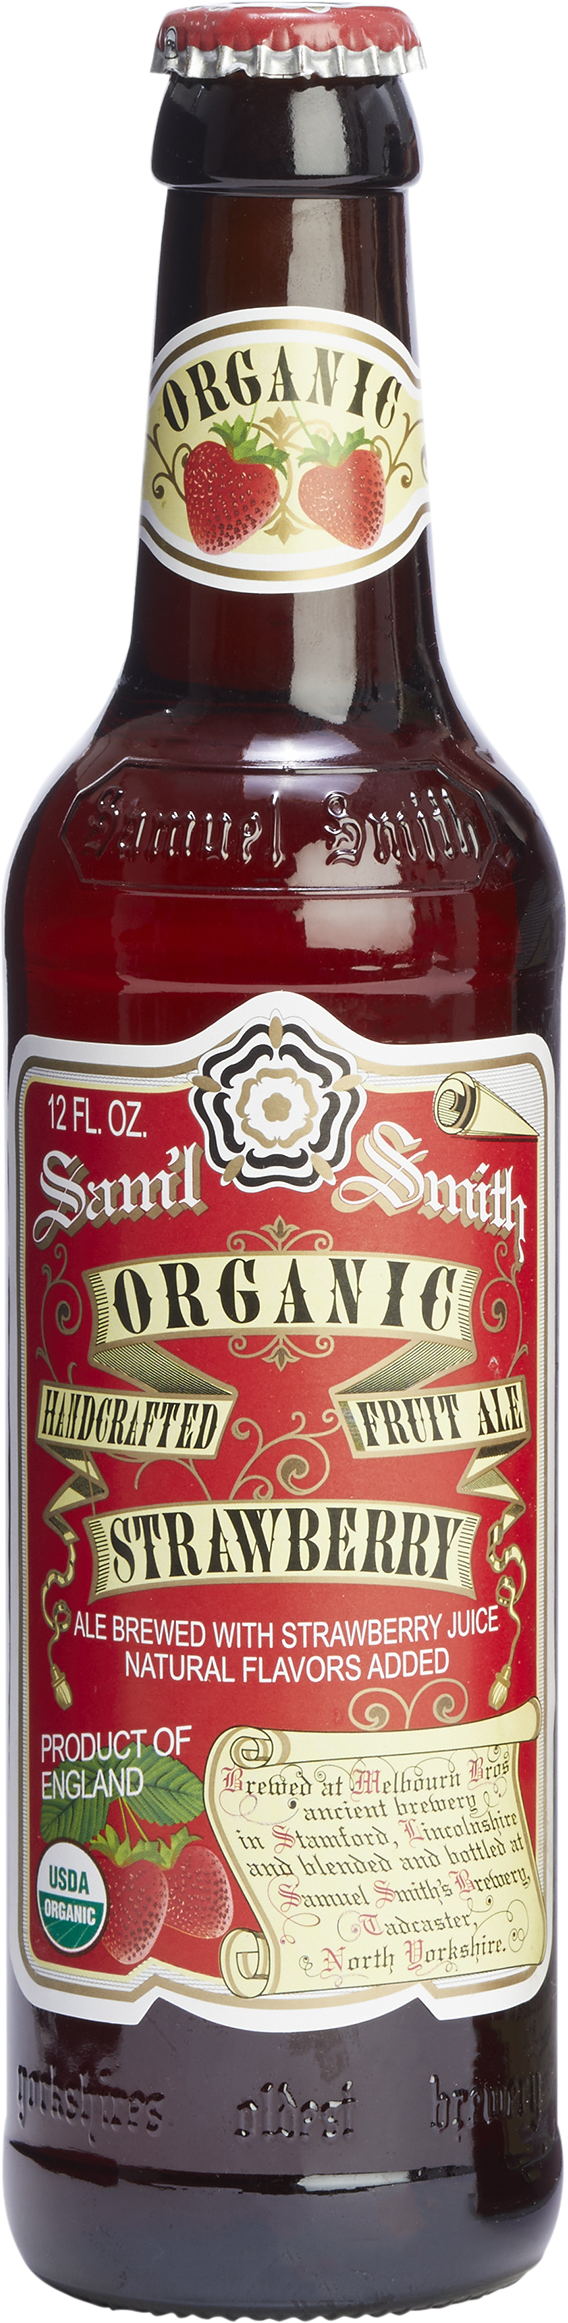 Organic Strawberry Ale